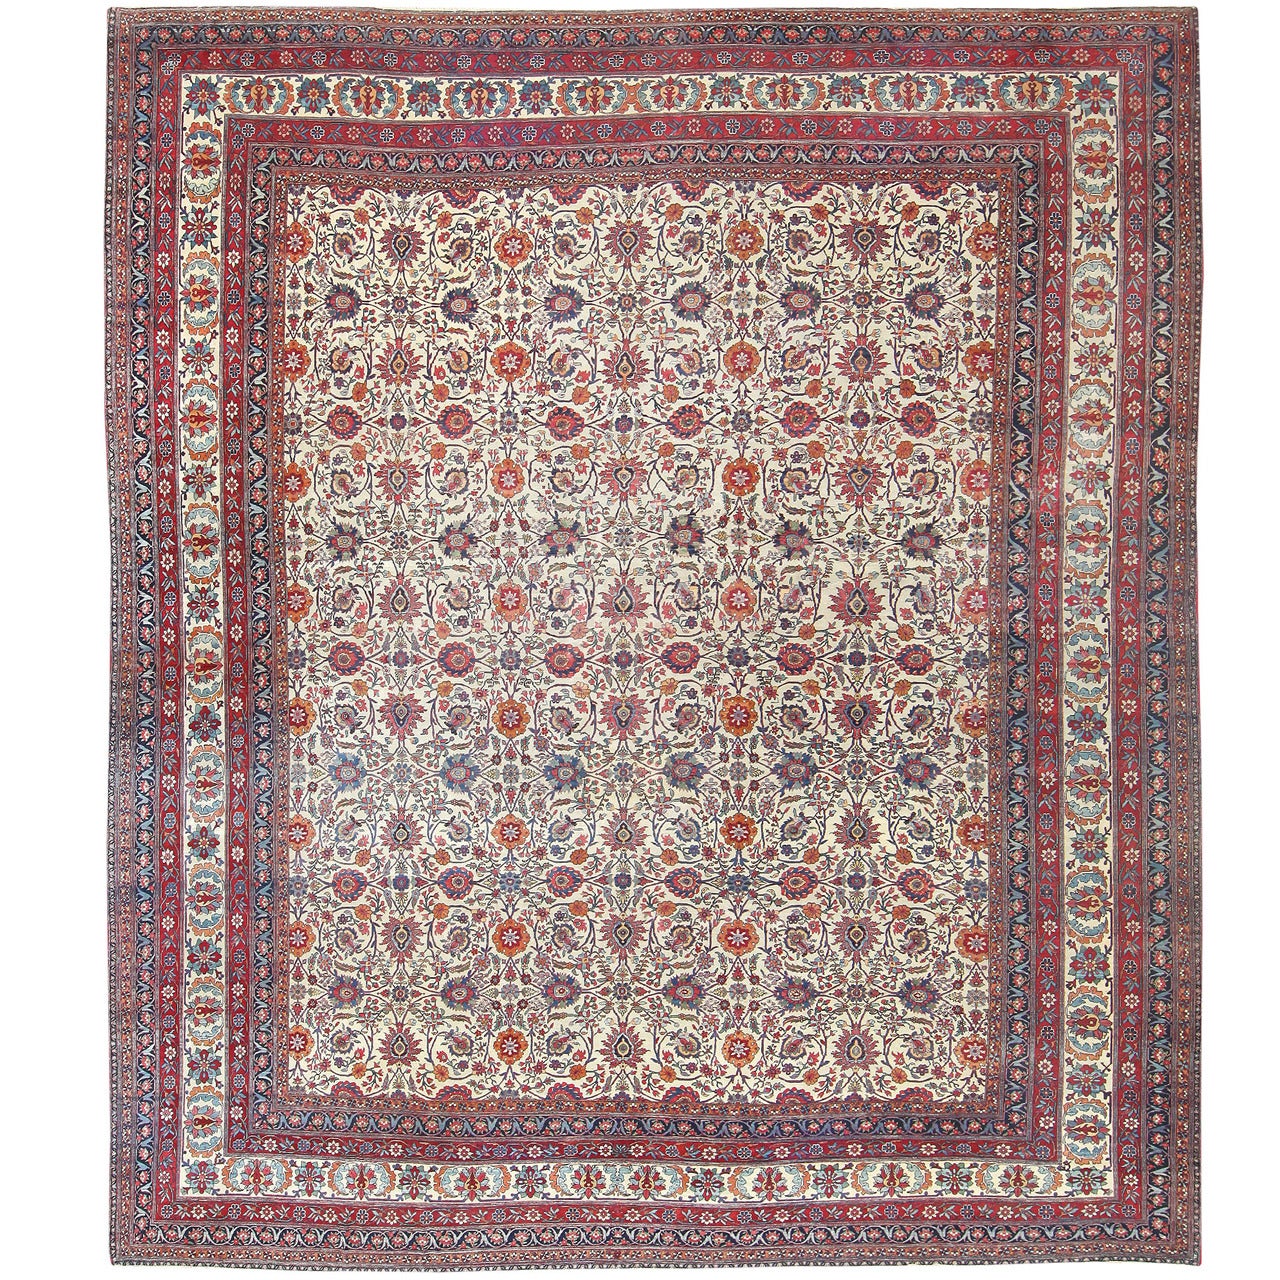 Antique Persian Kerman Carpet, circa 1880